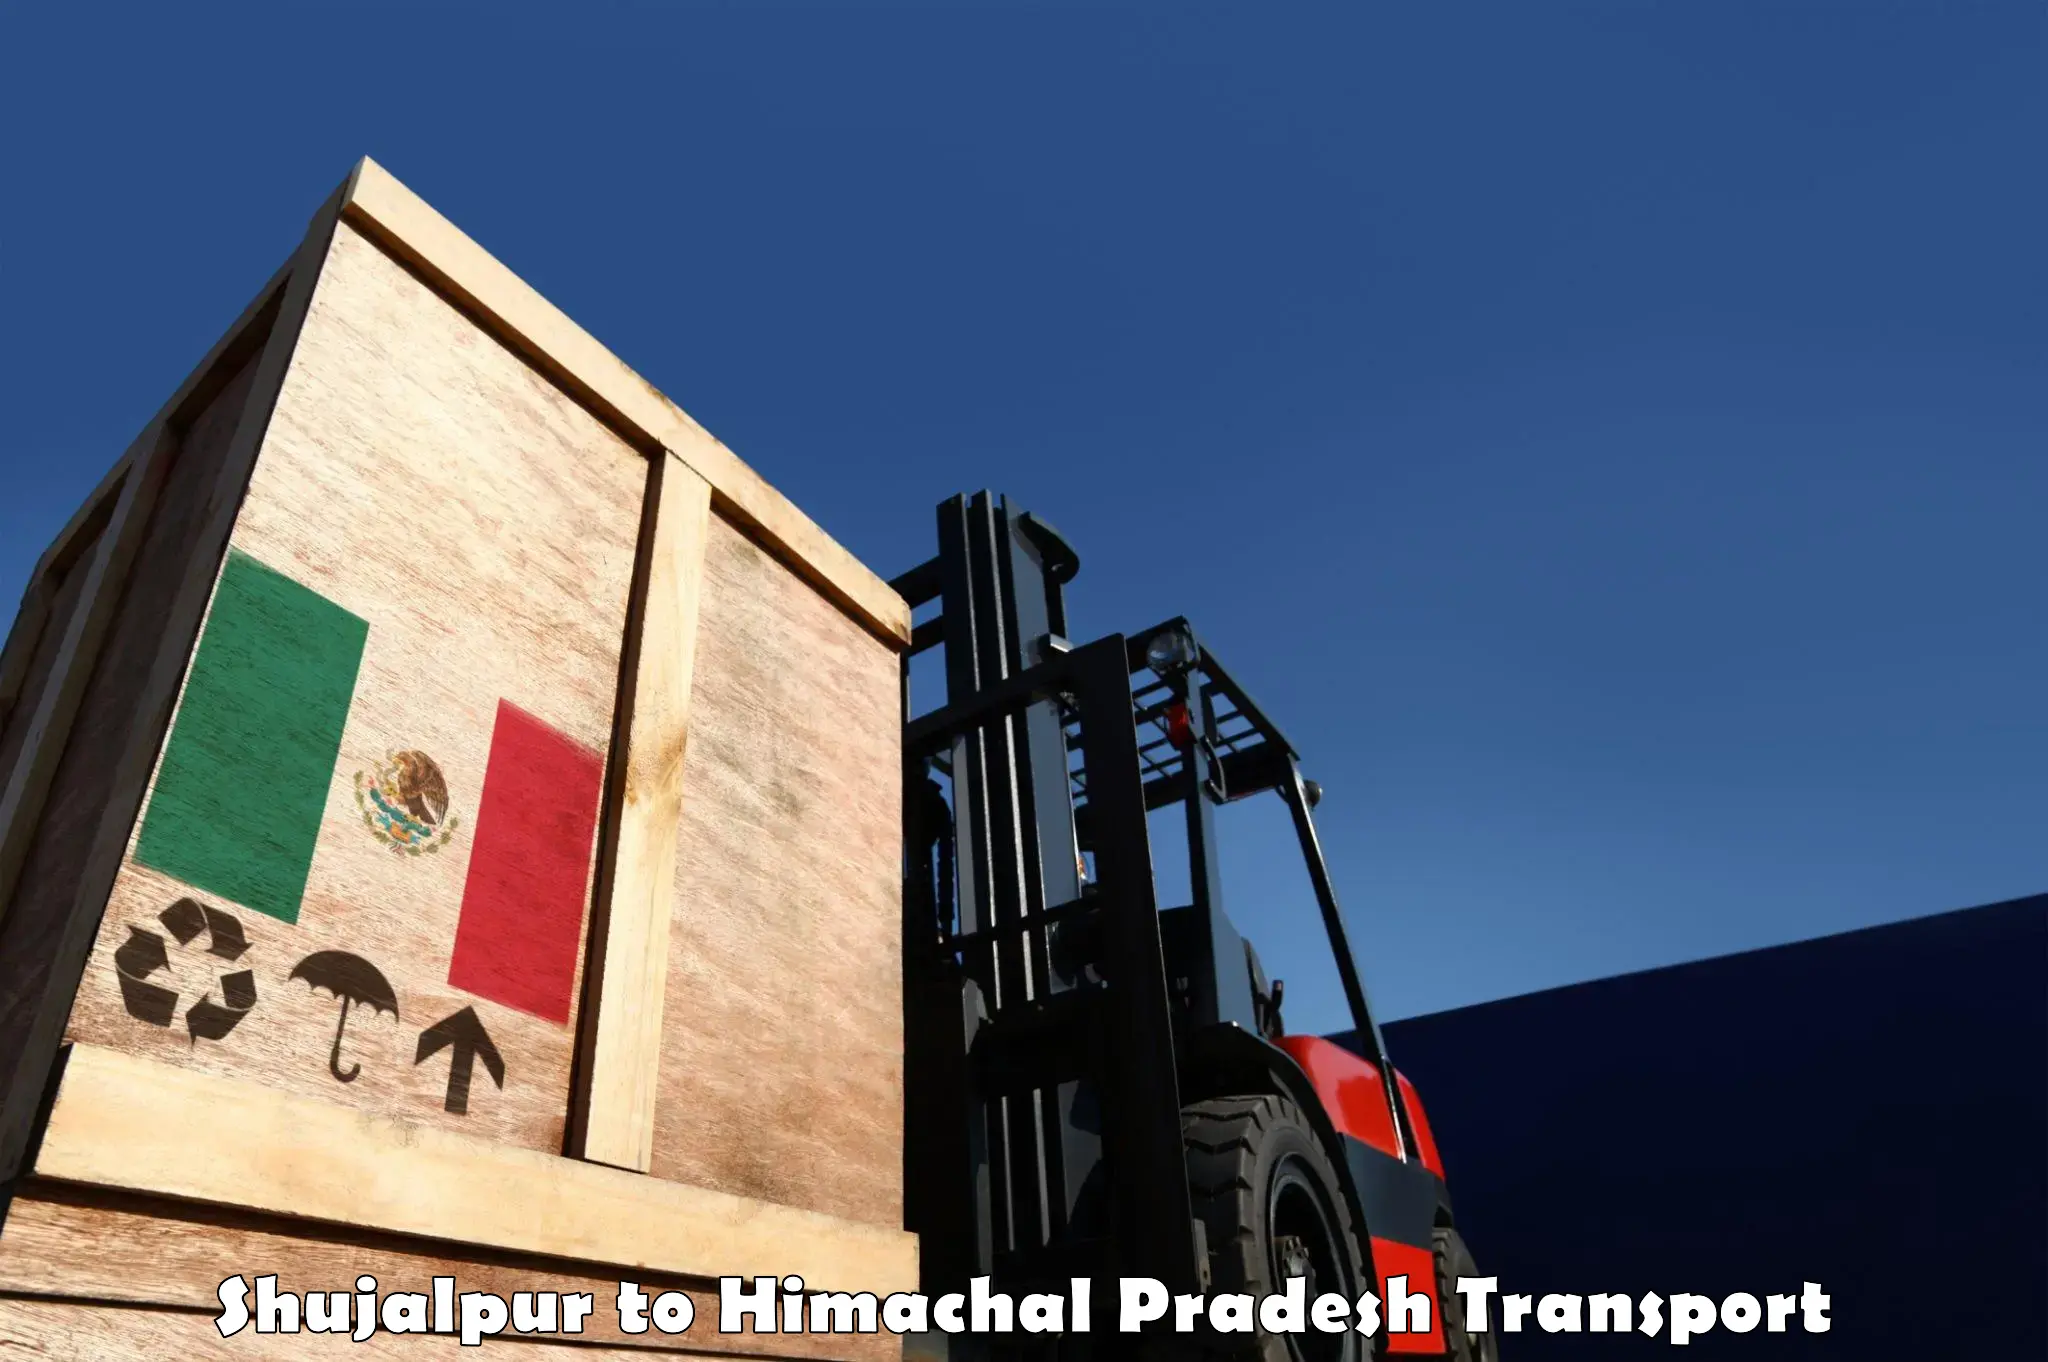 Transport in sharing Shujalpur to Dharamshala